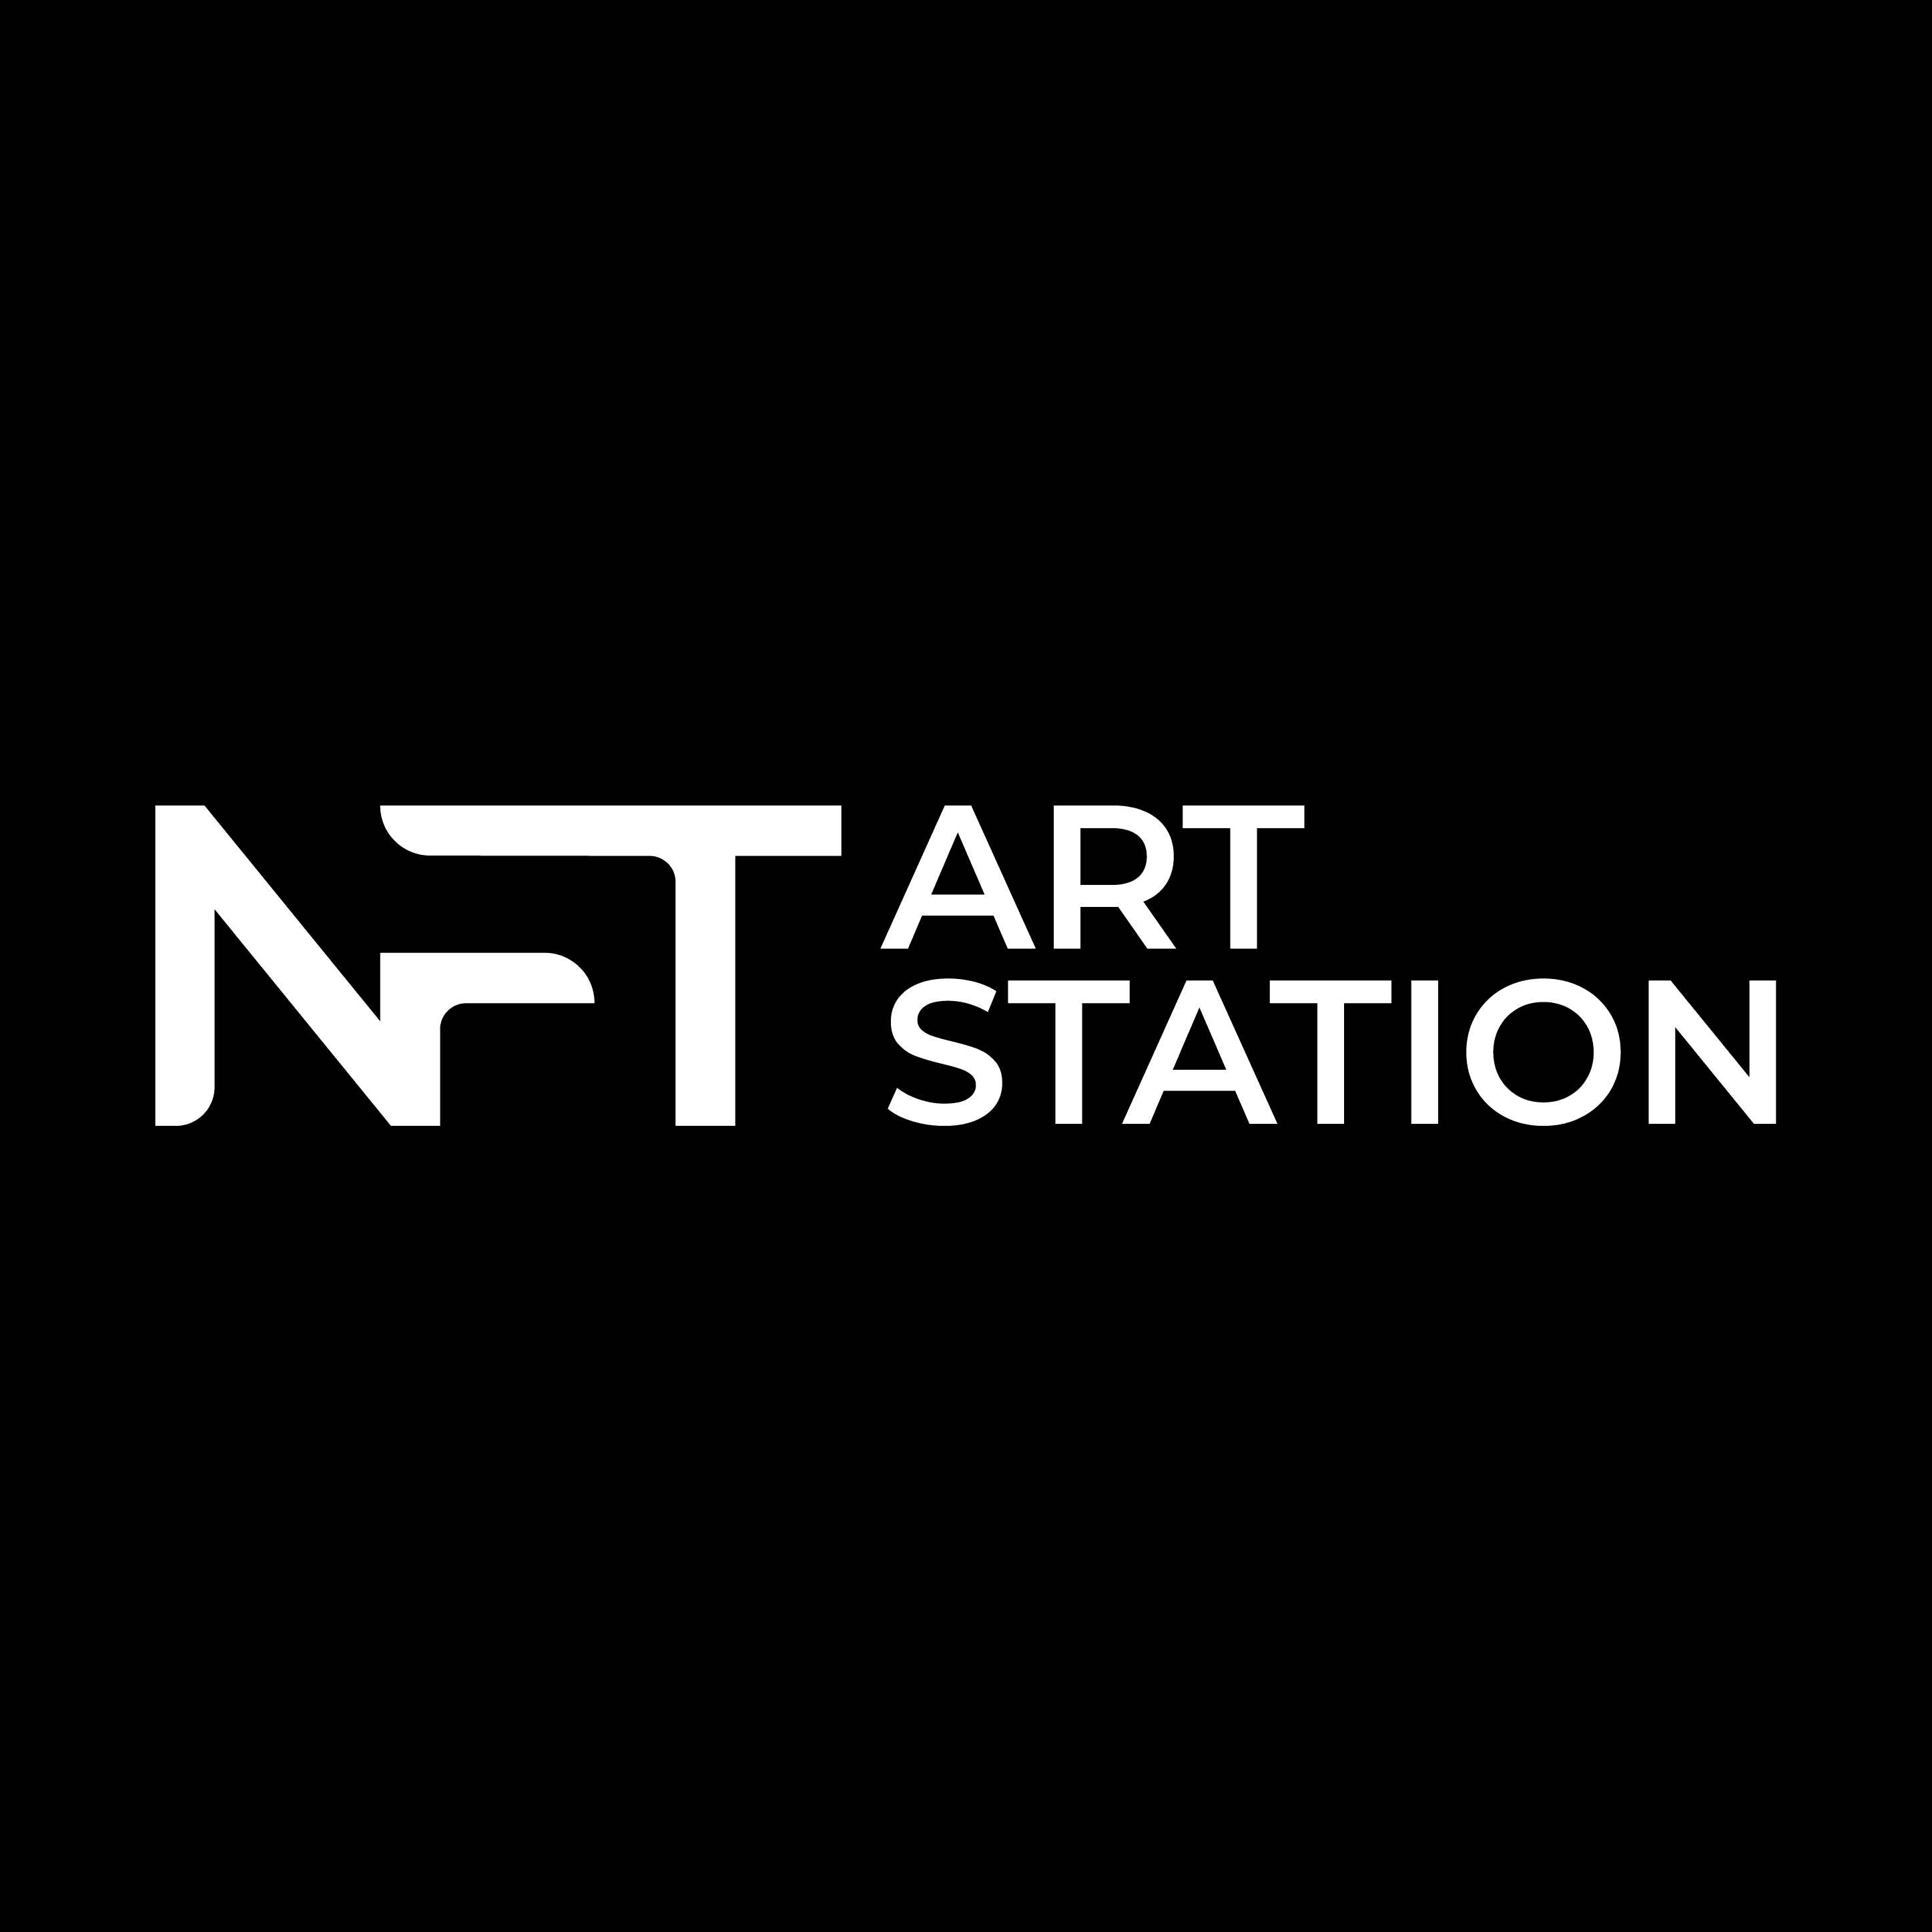 NFTArtStation